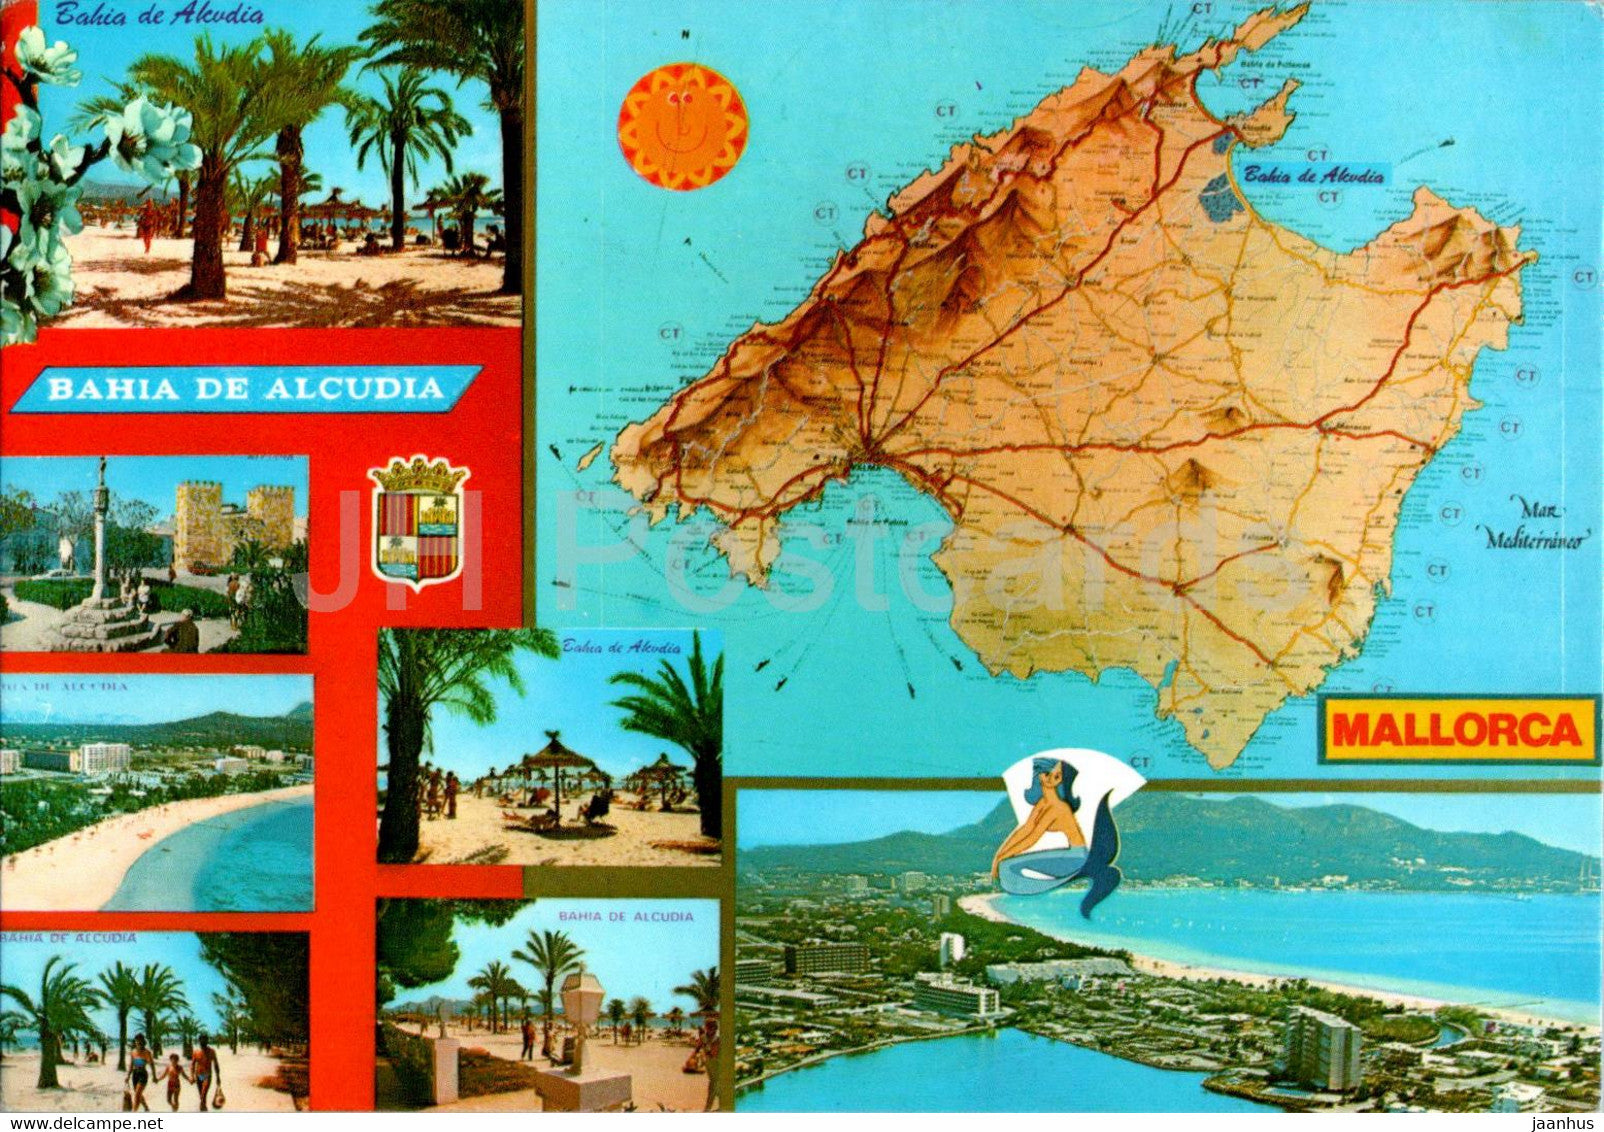 Bahia de Alcudia - map - multiview - 2578 - Mallorca - Spain - used - JH Postcards